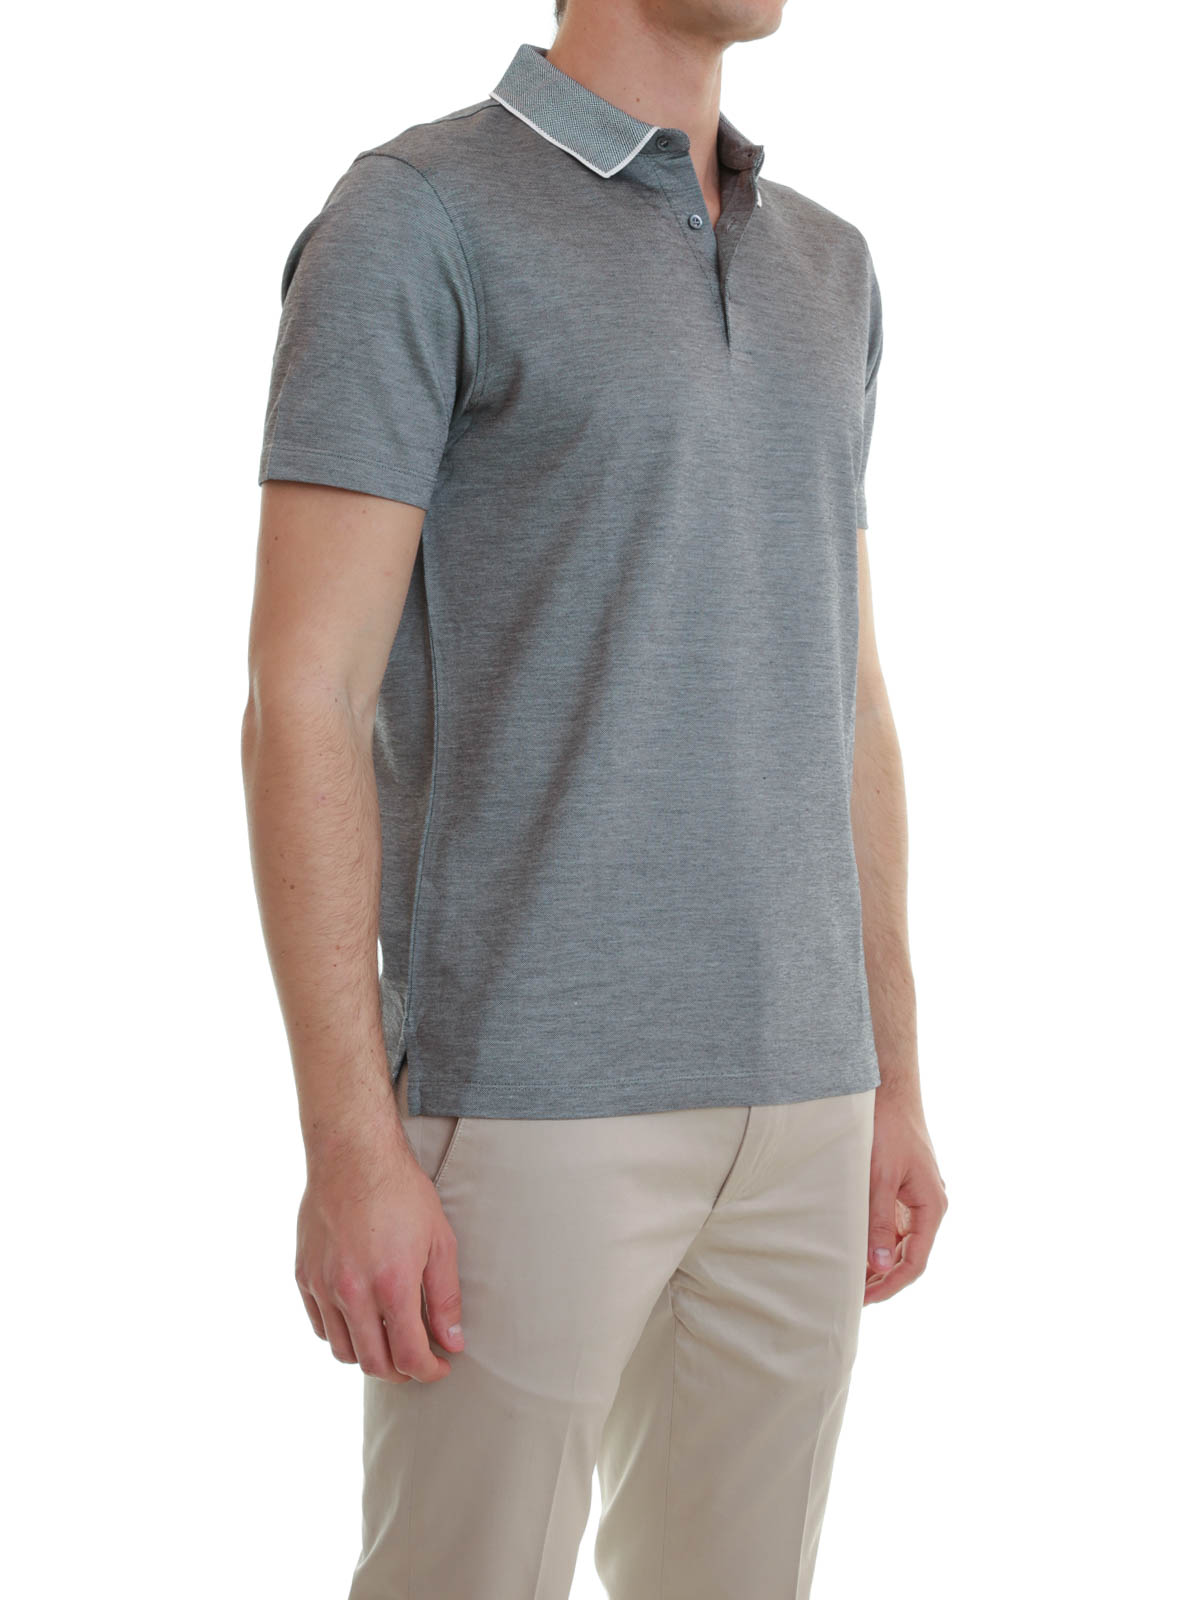 Corneliani Cotton Polo Shirt